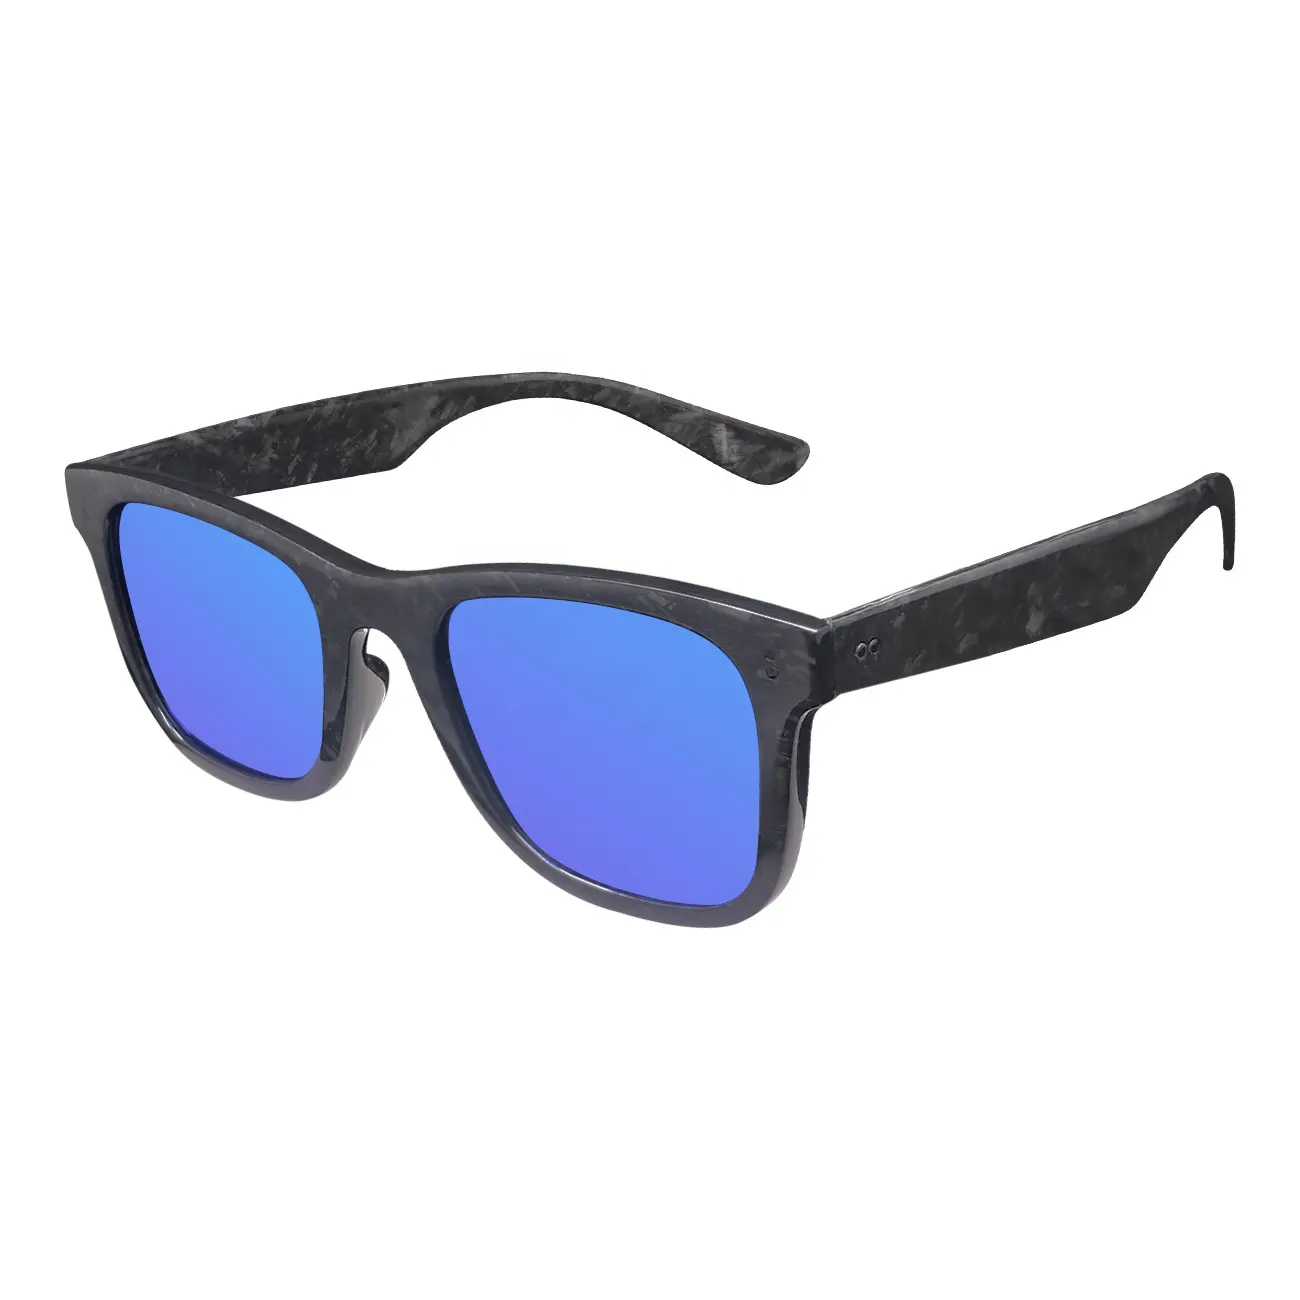 Kacamata hitam serat karbon tempa polarisasi kelas atas kacamata persegi biru es kacamata Logo kustom kacamata hitam Pria Wanita UV400